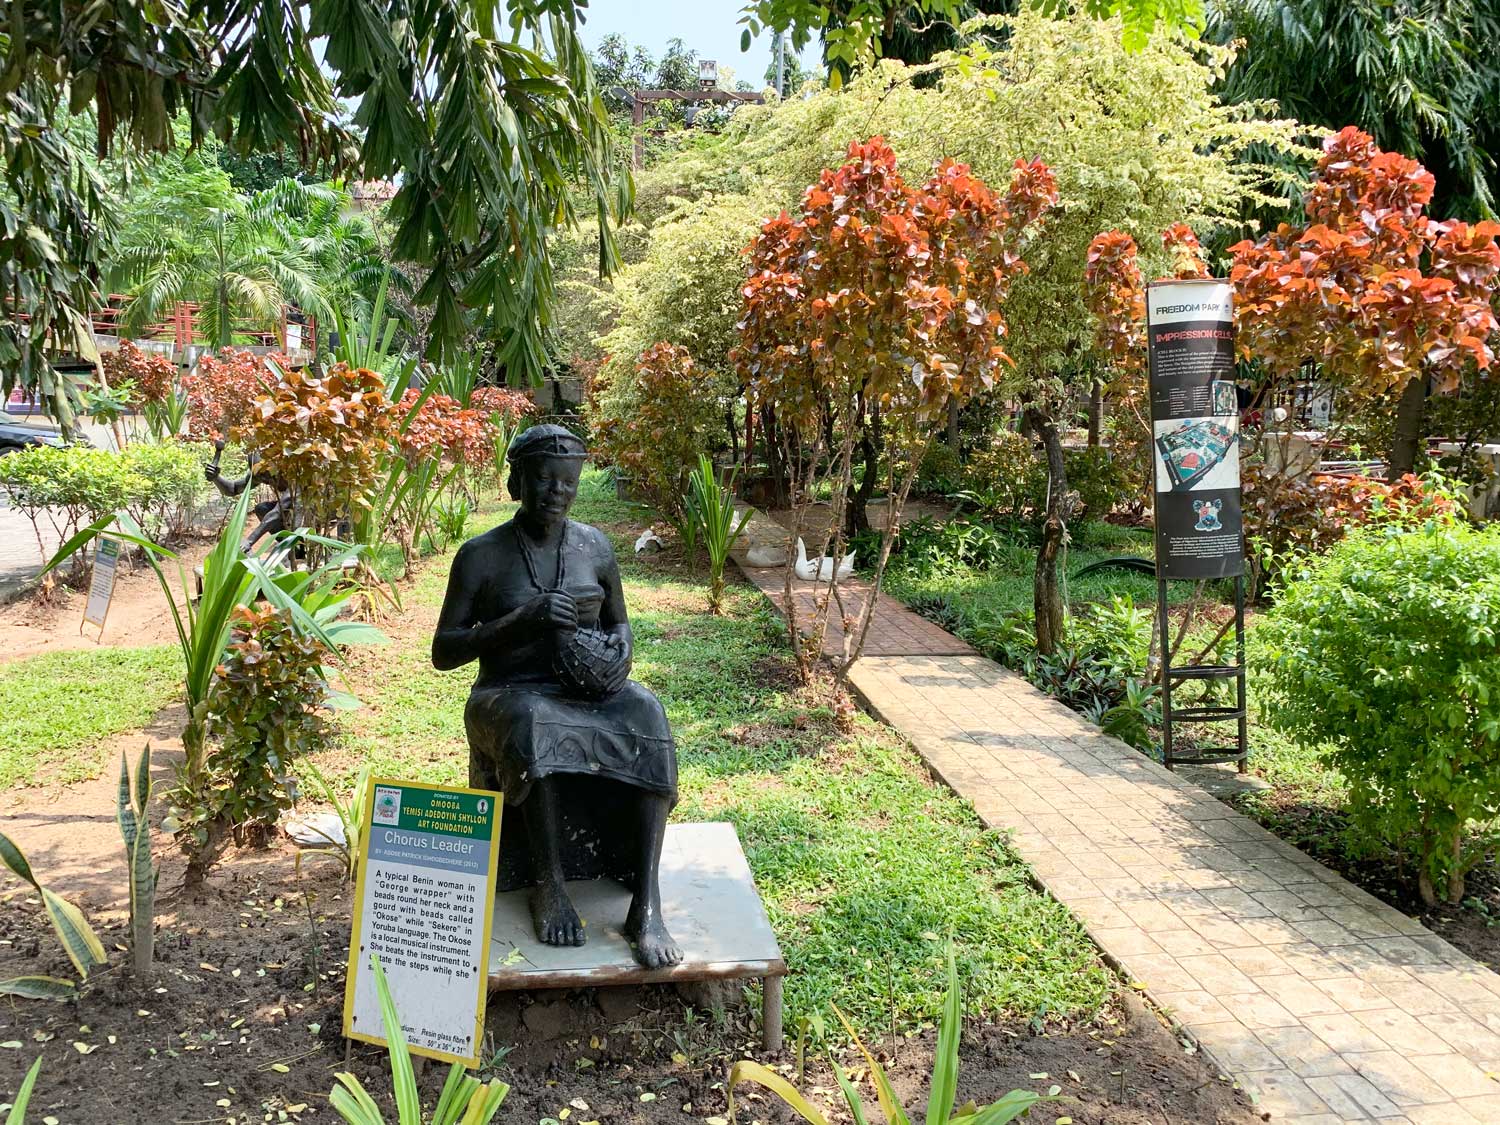 <div>Statue of a chorus leader and brick walkways through the garden</div>